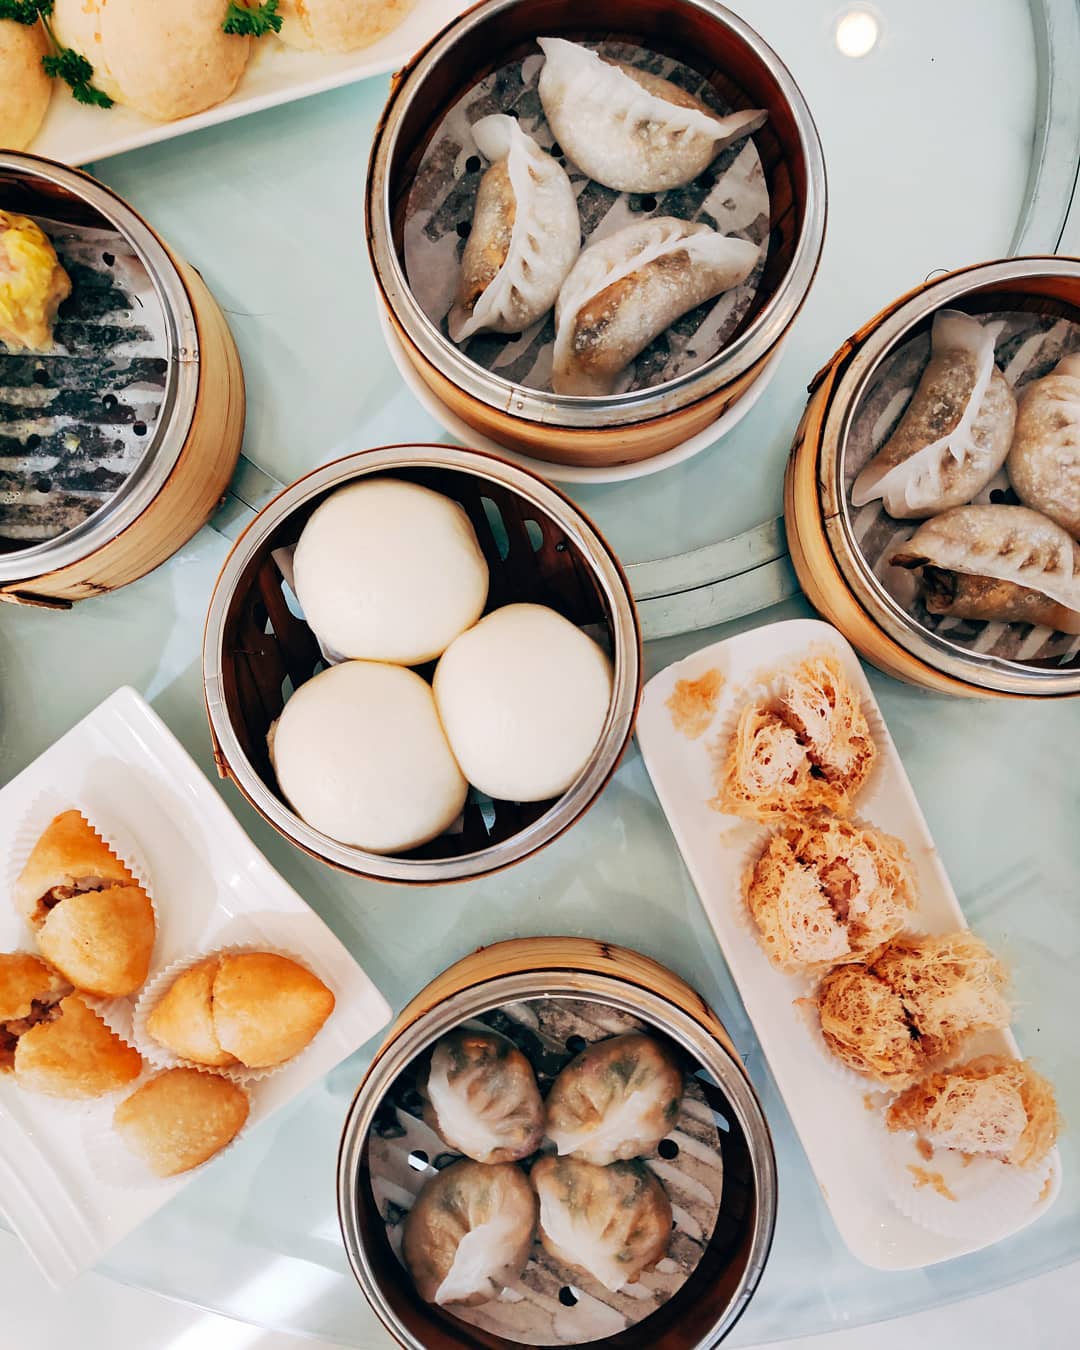 Table photo of a selection of dumplings